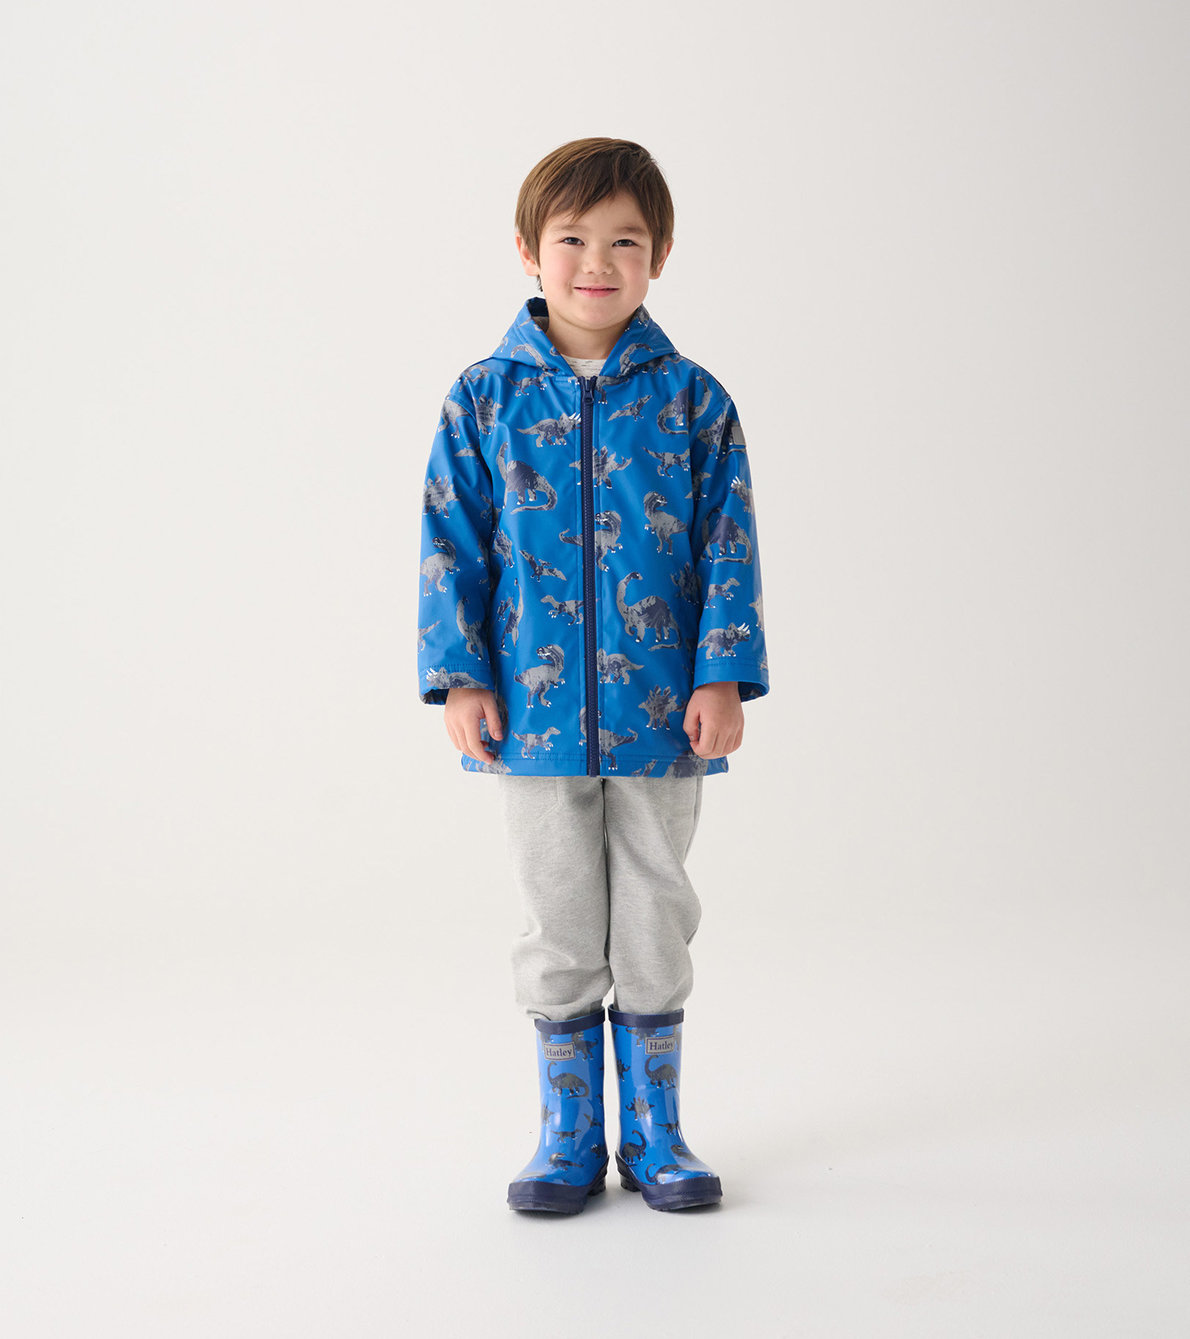 View larger image of Boys Dinosaur Zip-Up Raincoat